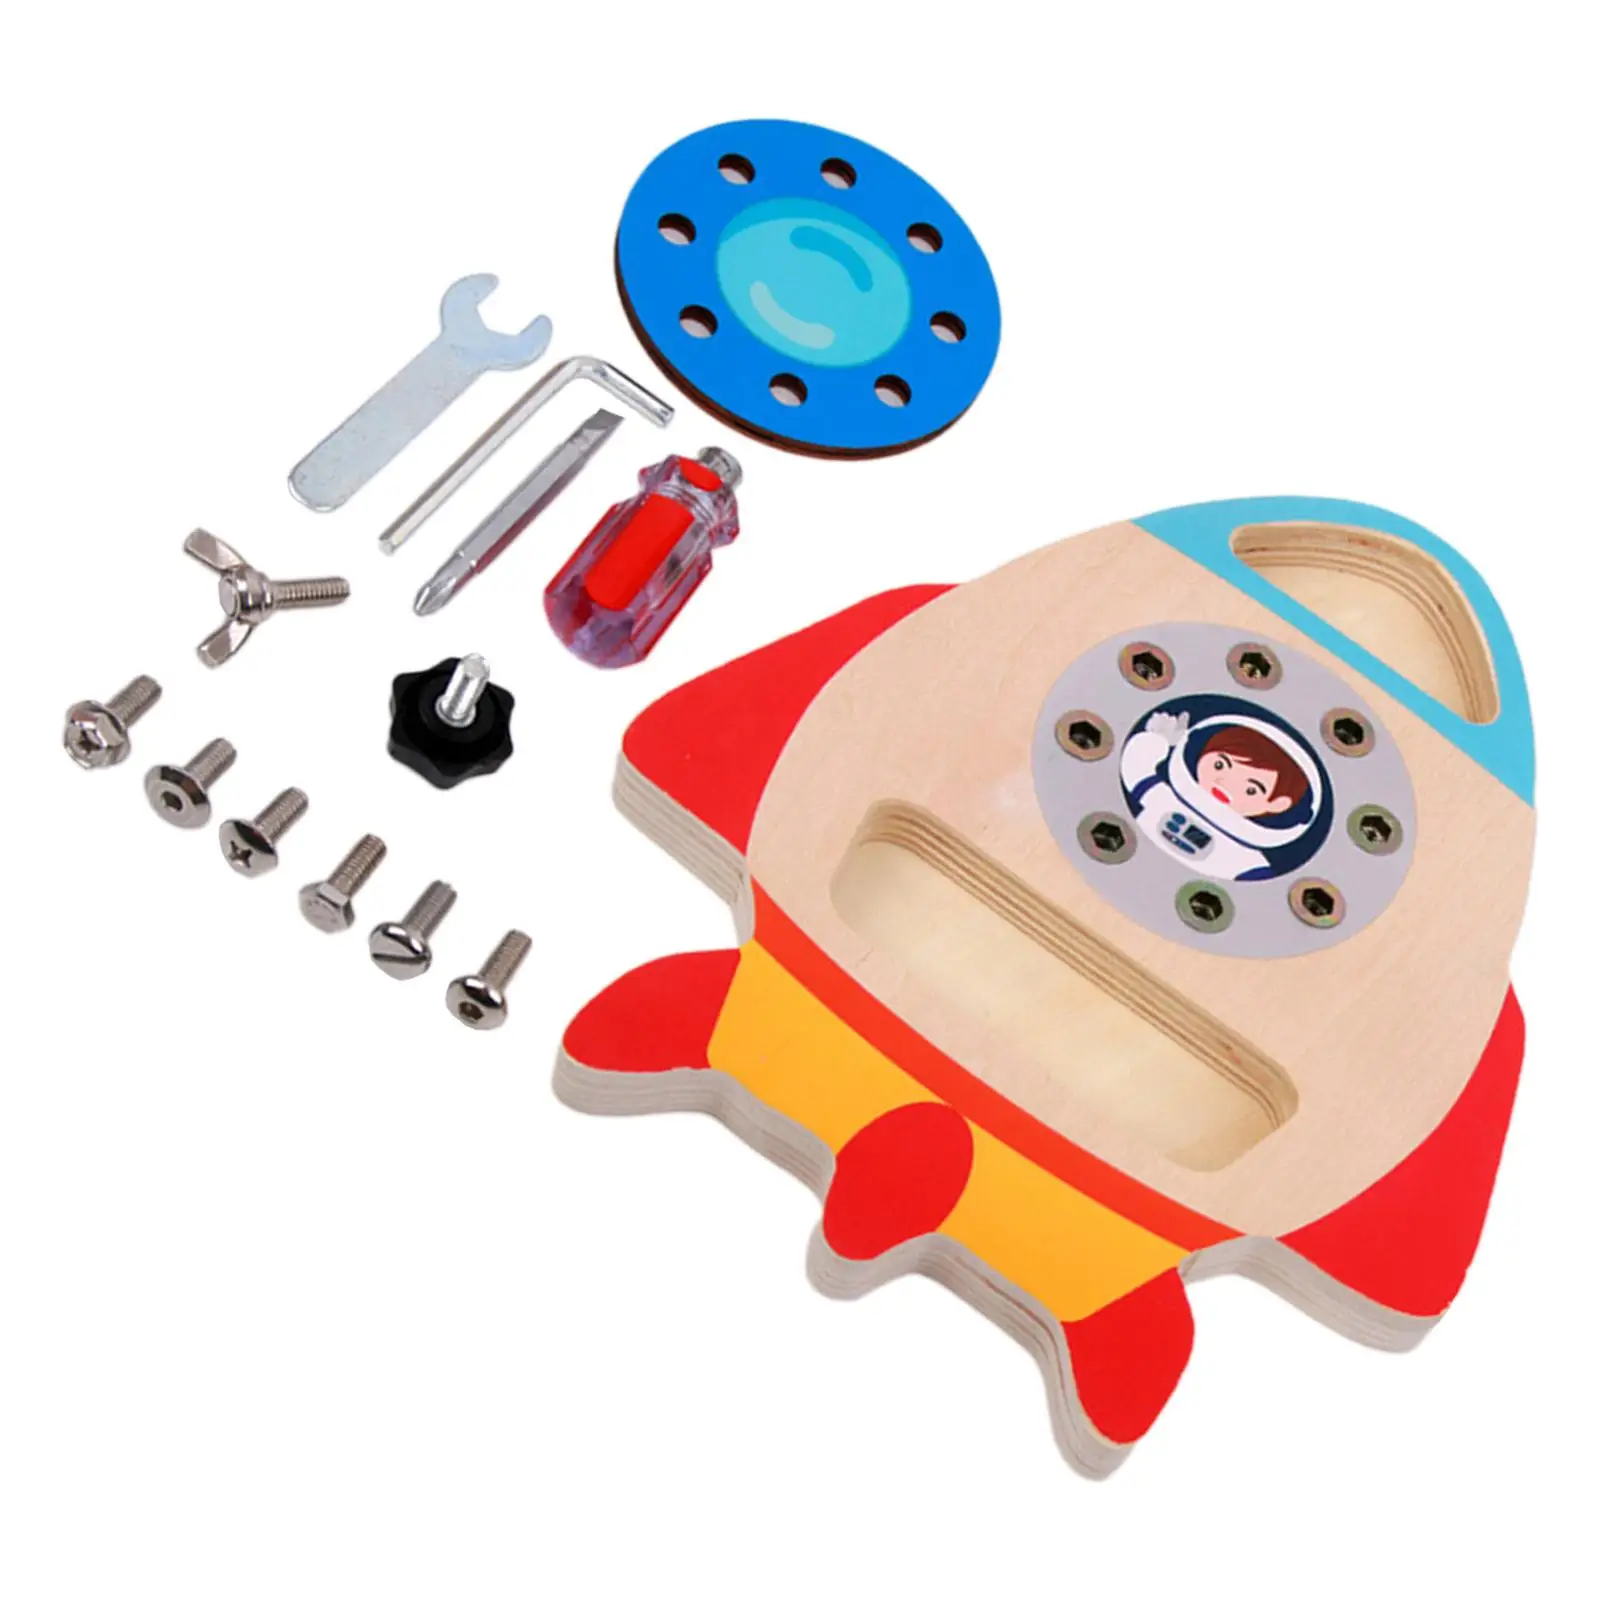 Screwdriver Board Set Toy Educational Sensory Learning Toy for Preschool Boy